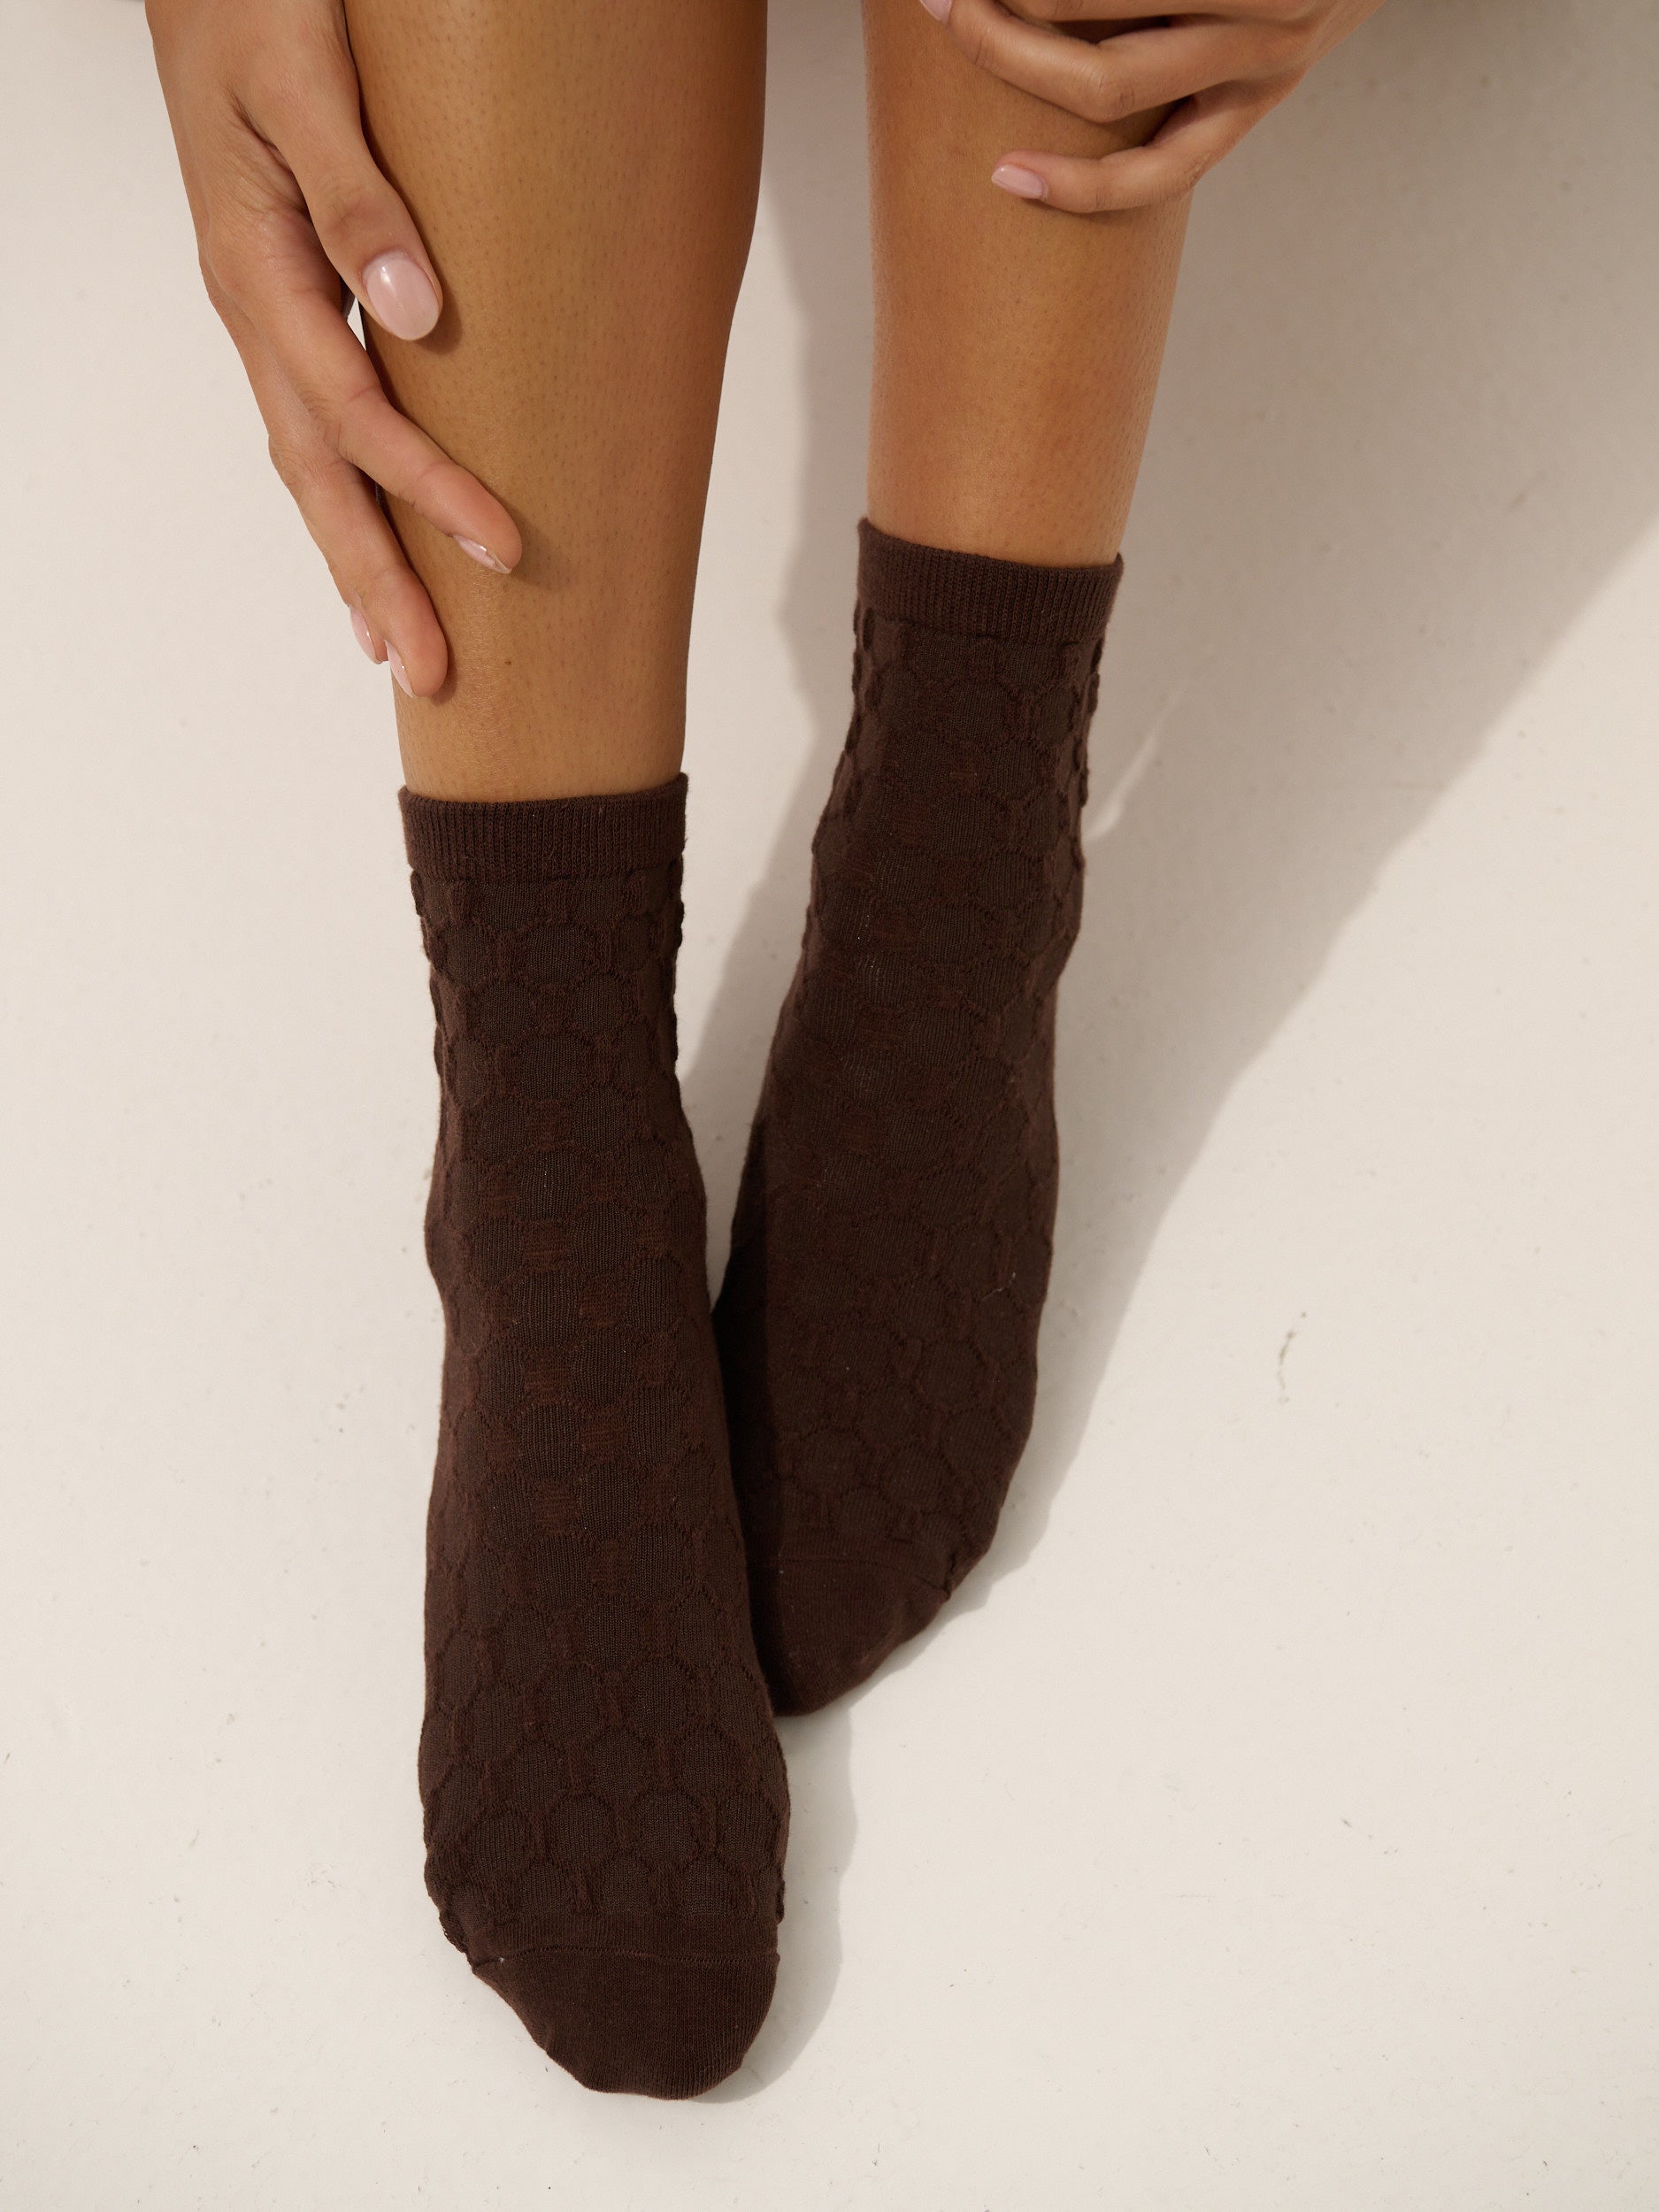 Hive Textured Winter Socks